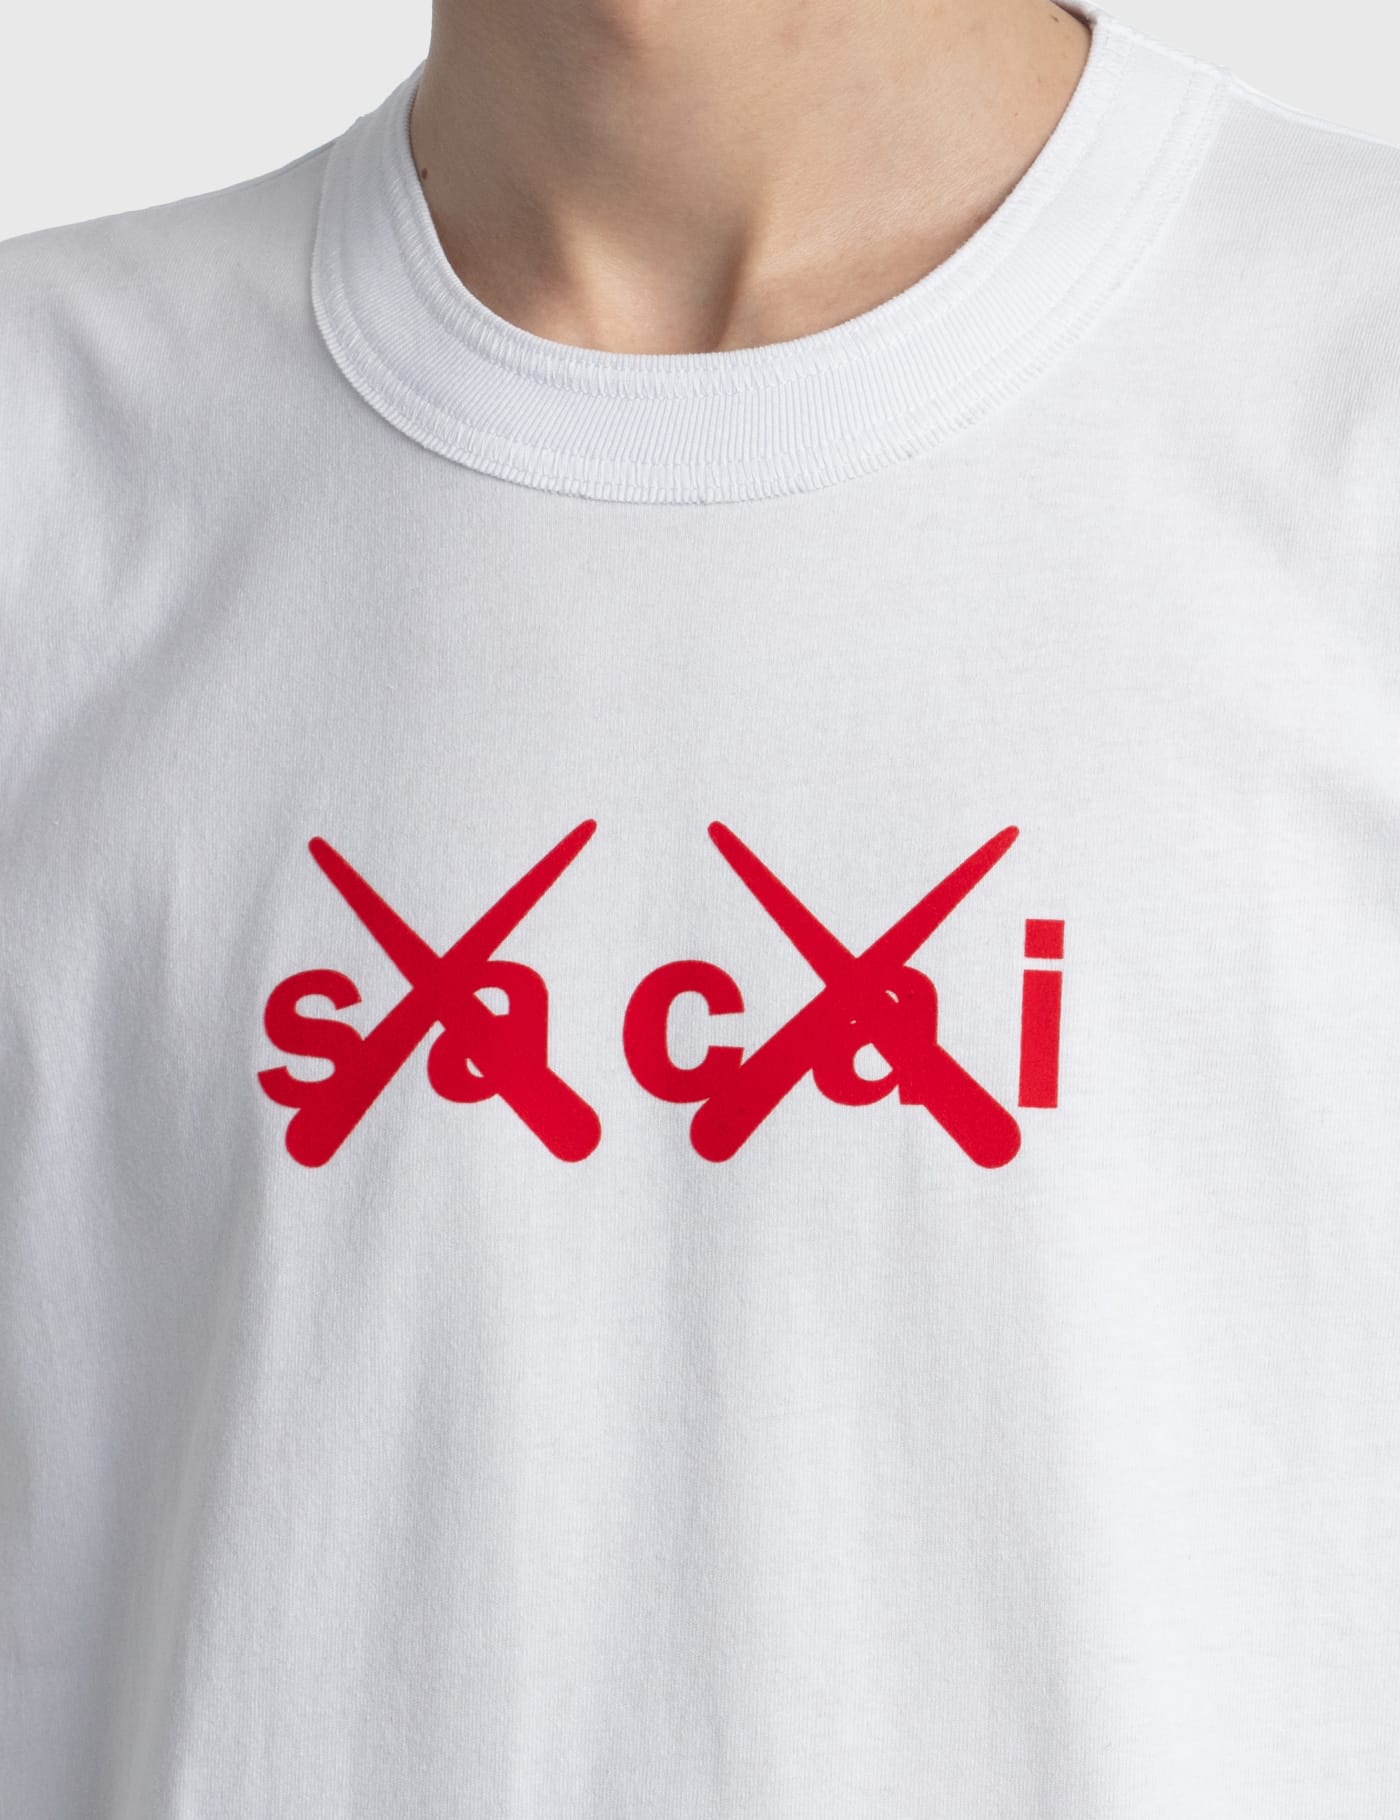 Sacai - KAWS Flock Print T-shirt | HBX - Globally Curated Fashion 